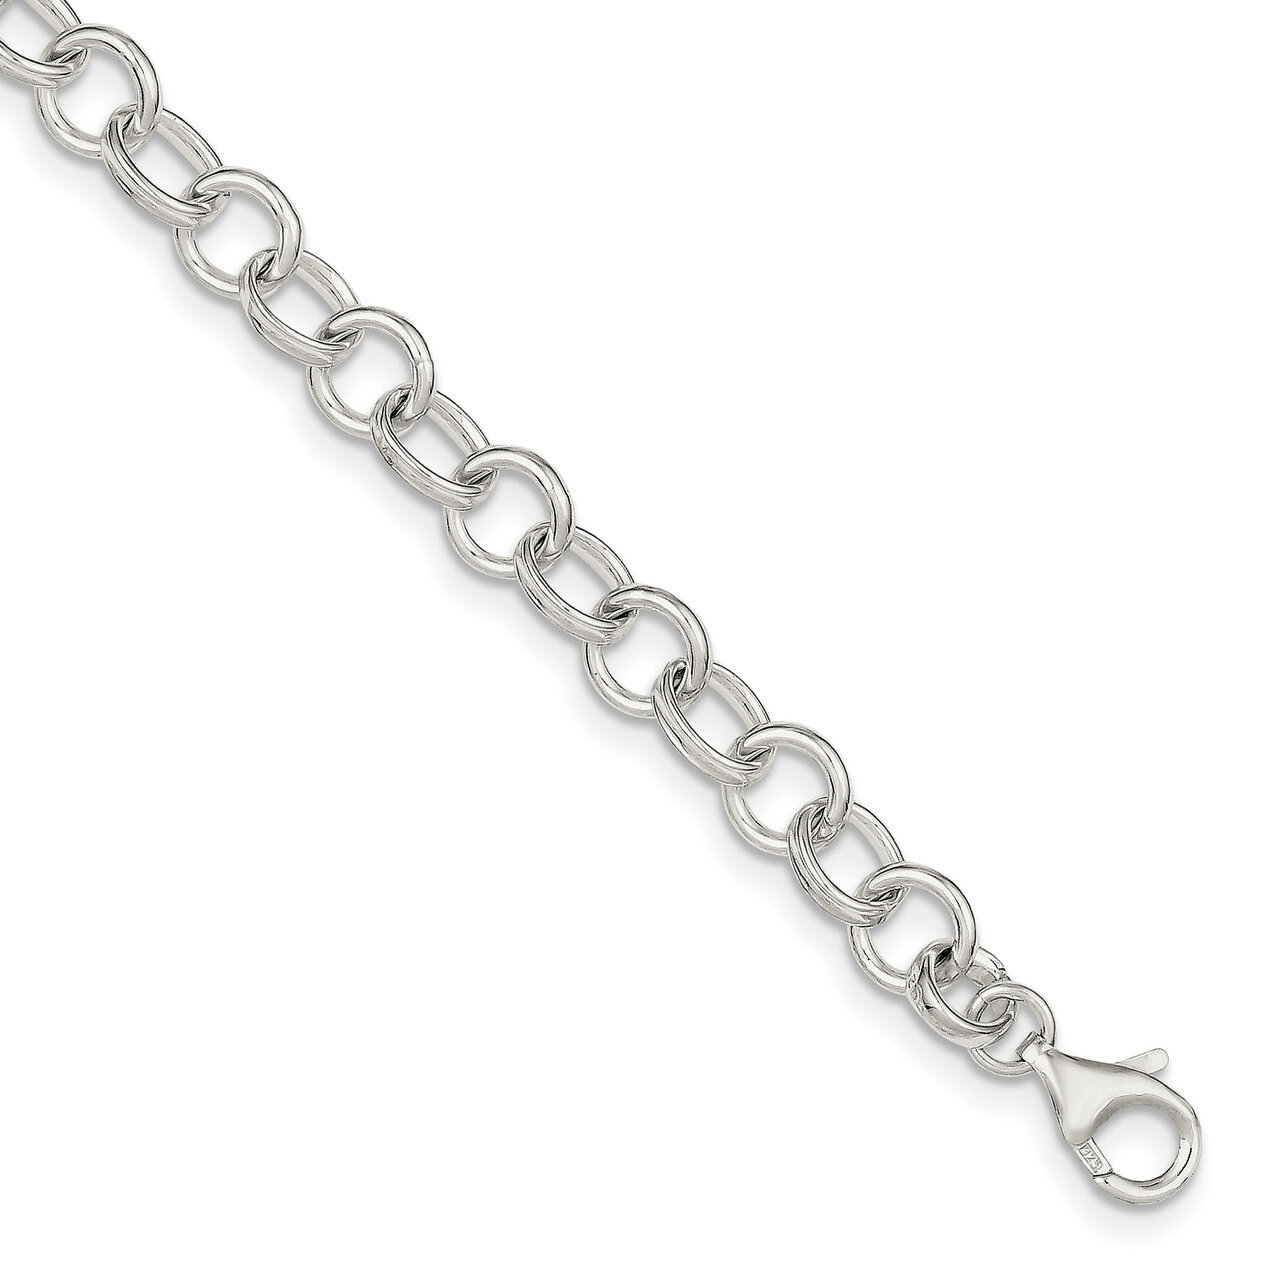 Bracelet 8.5 Inch Sterling Silver QG2239-8.5